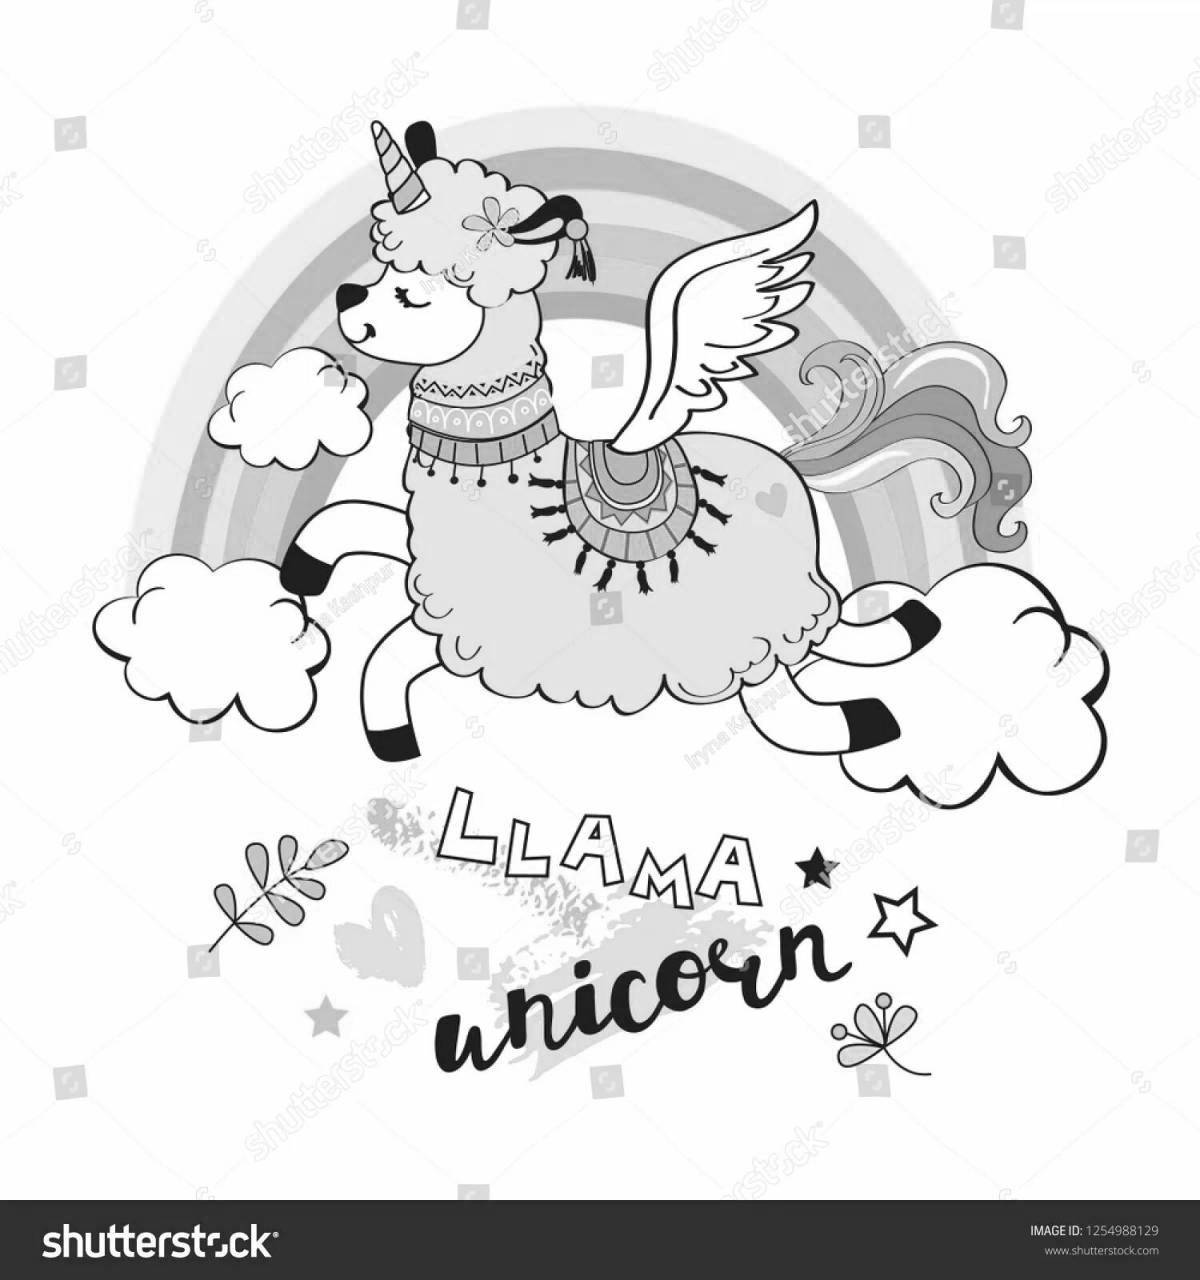 Llama unicorn glitter coloring book